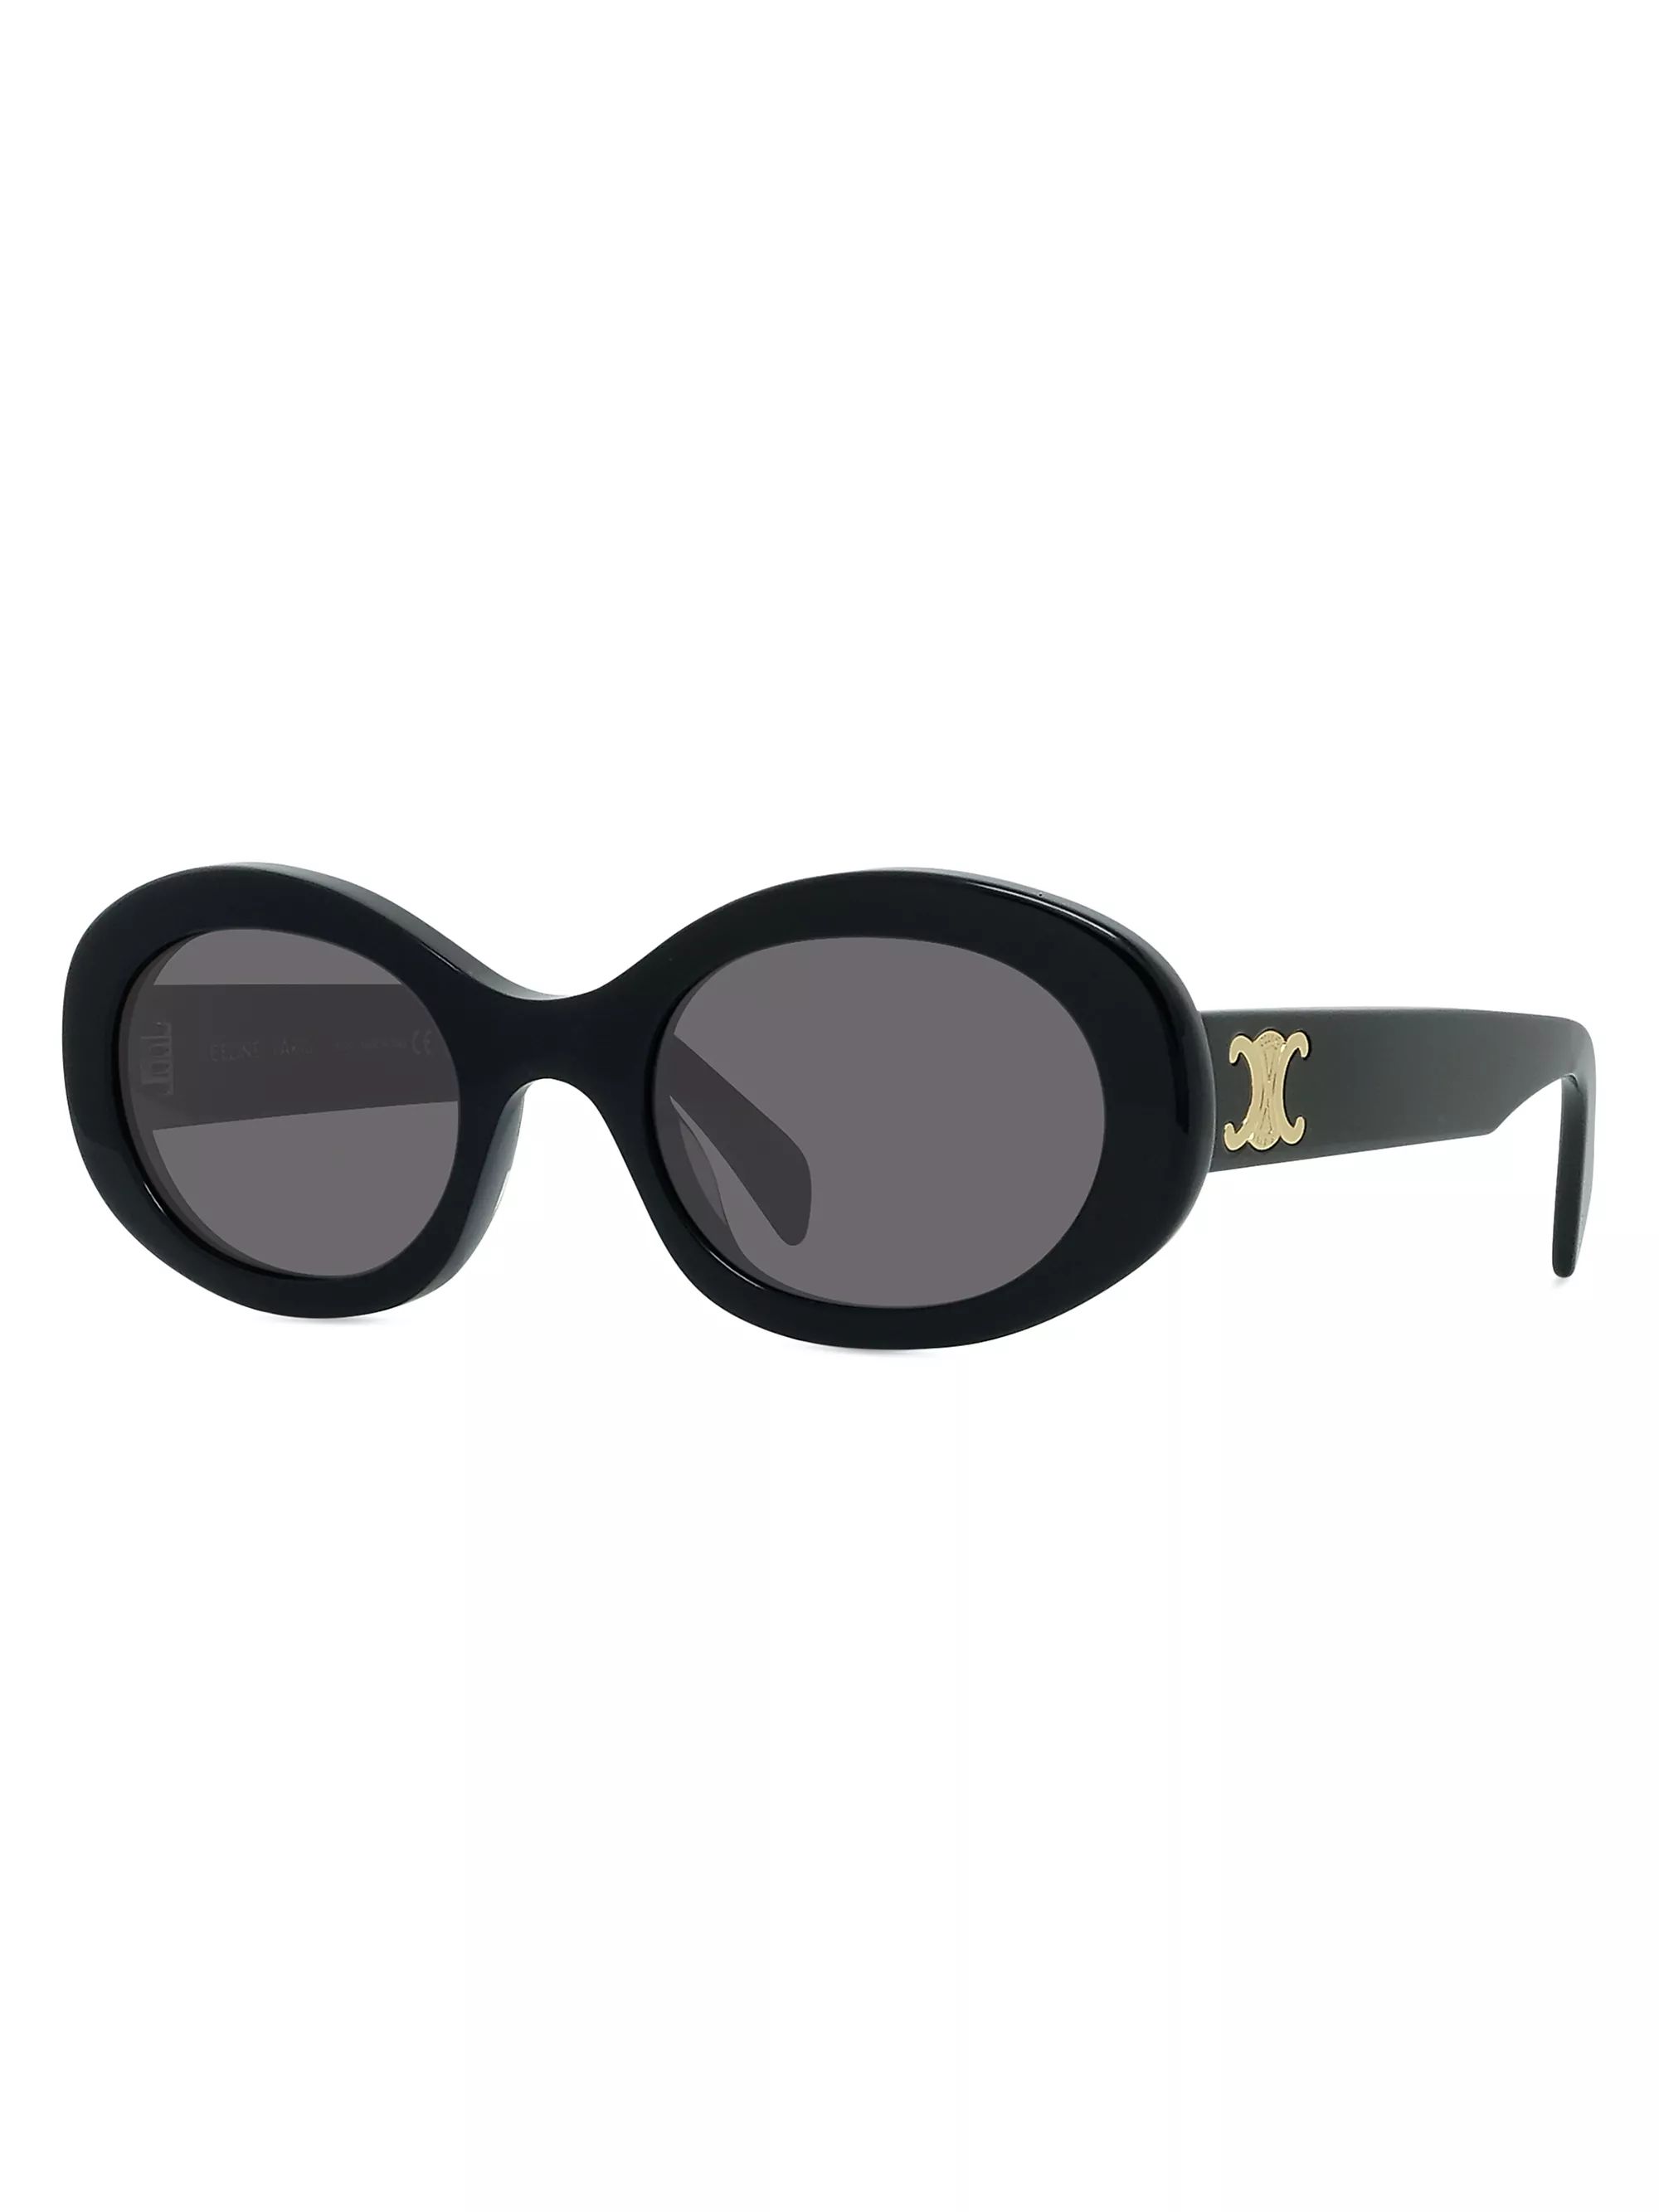 SunglassesRound & OvalCELINETriomphe 52MM Oval Sunglasses$510 | Saks Fifth Avenue